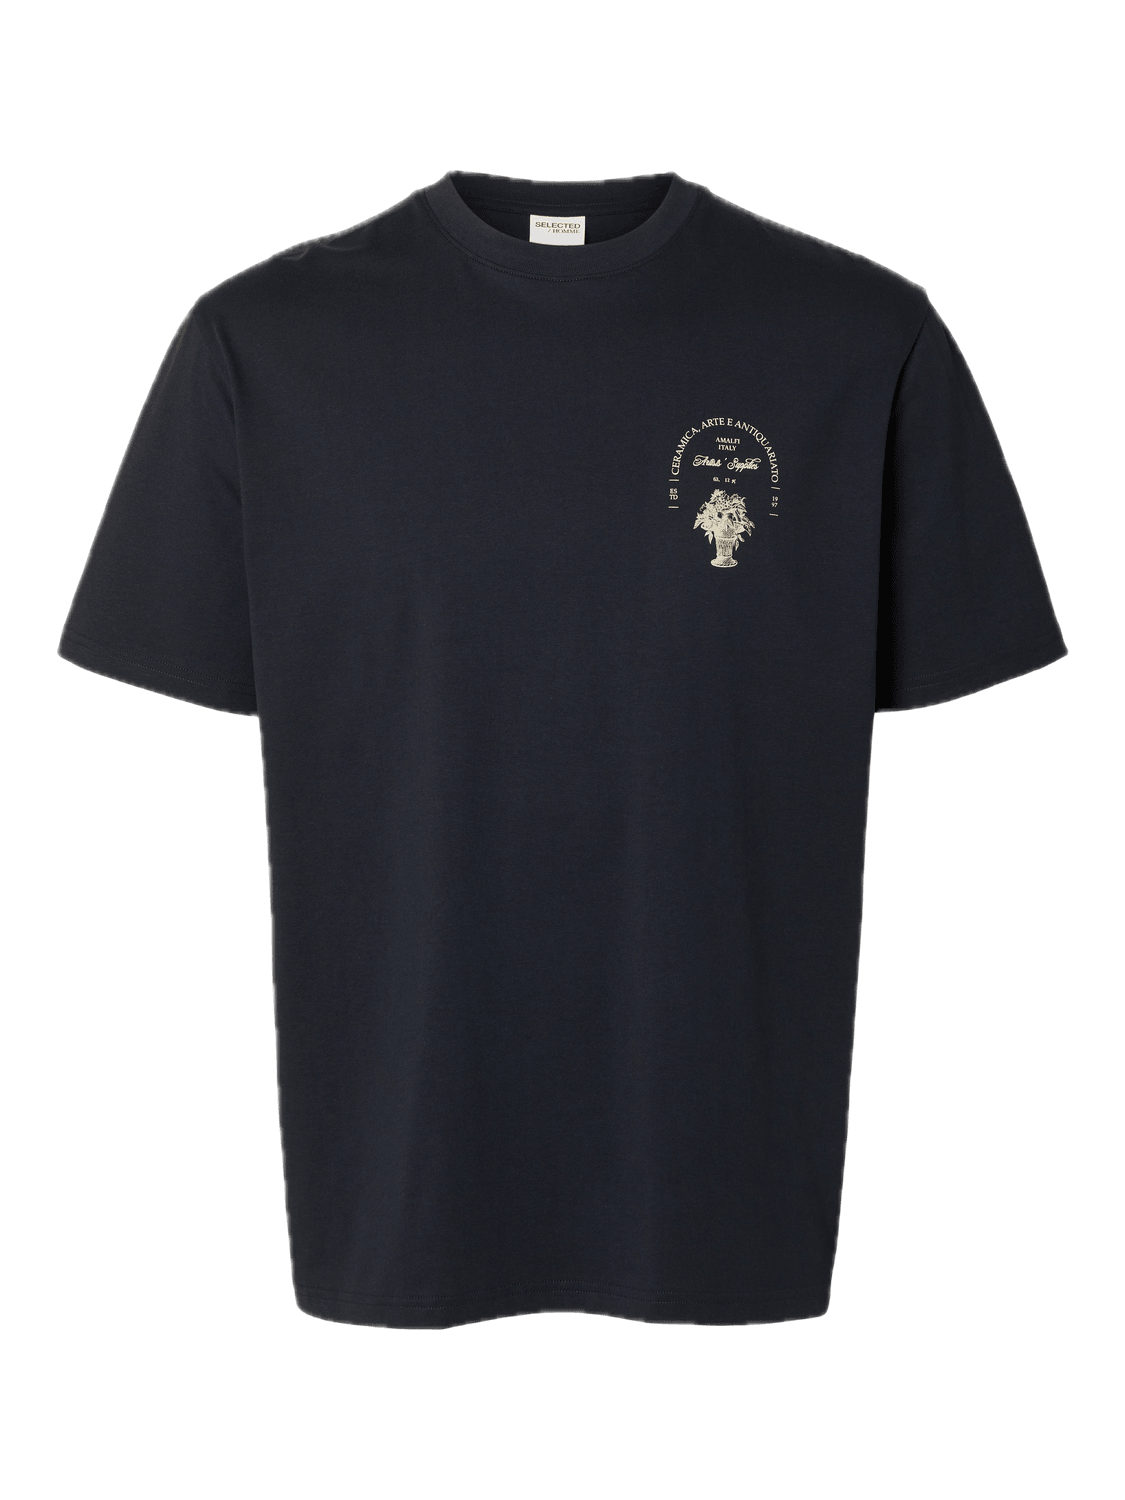 Camiseta Selected Relaxaries Sky Captain - ECRU